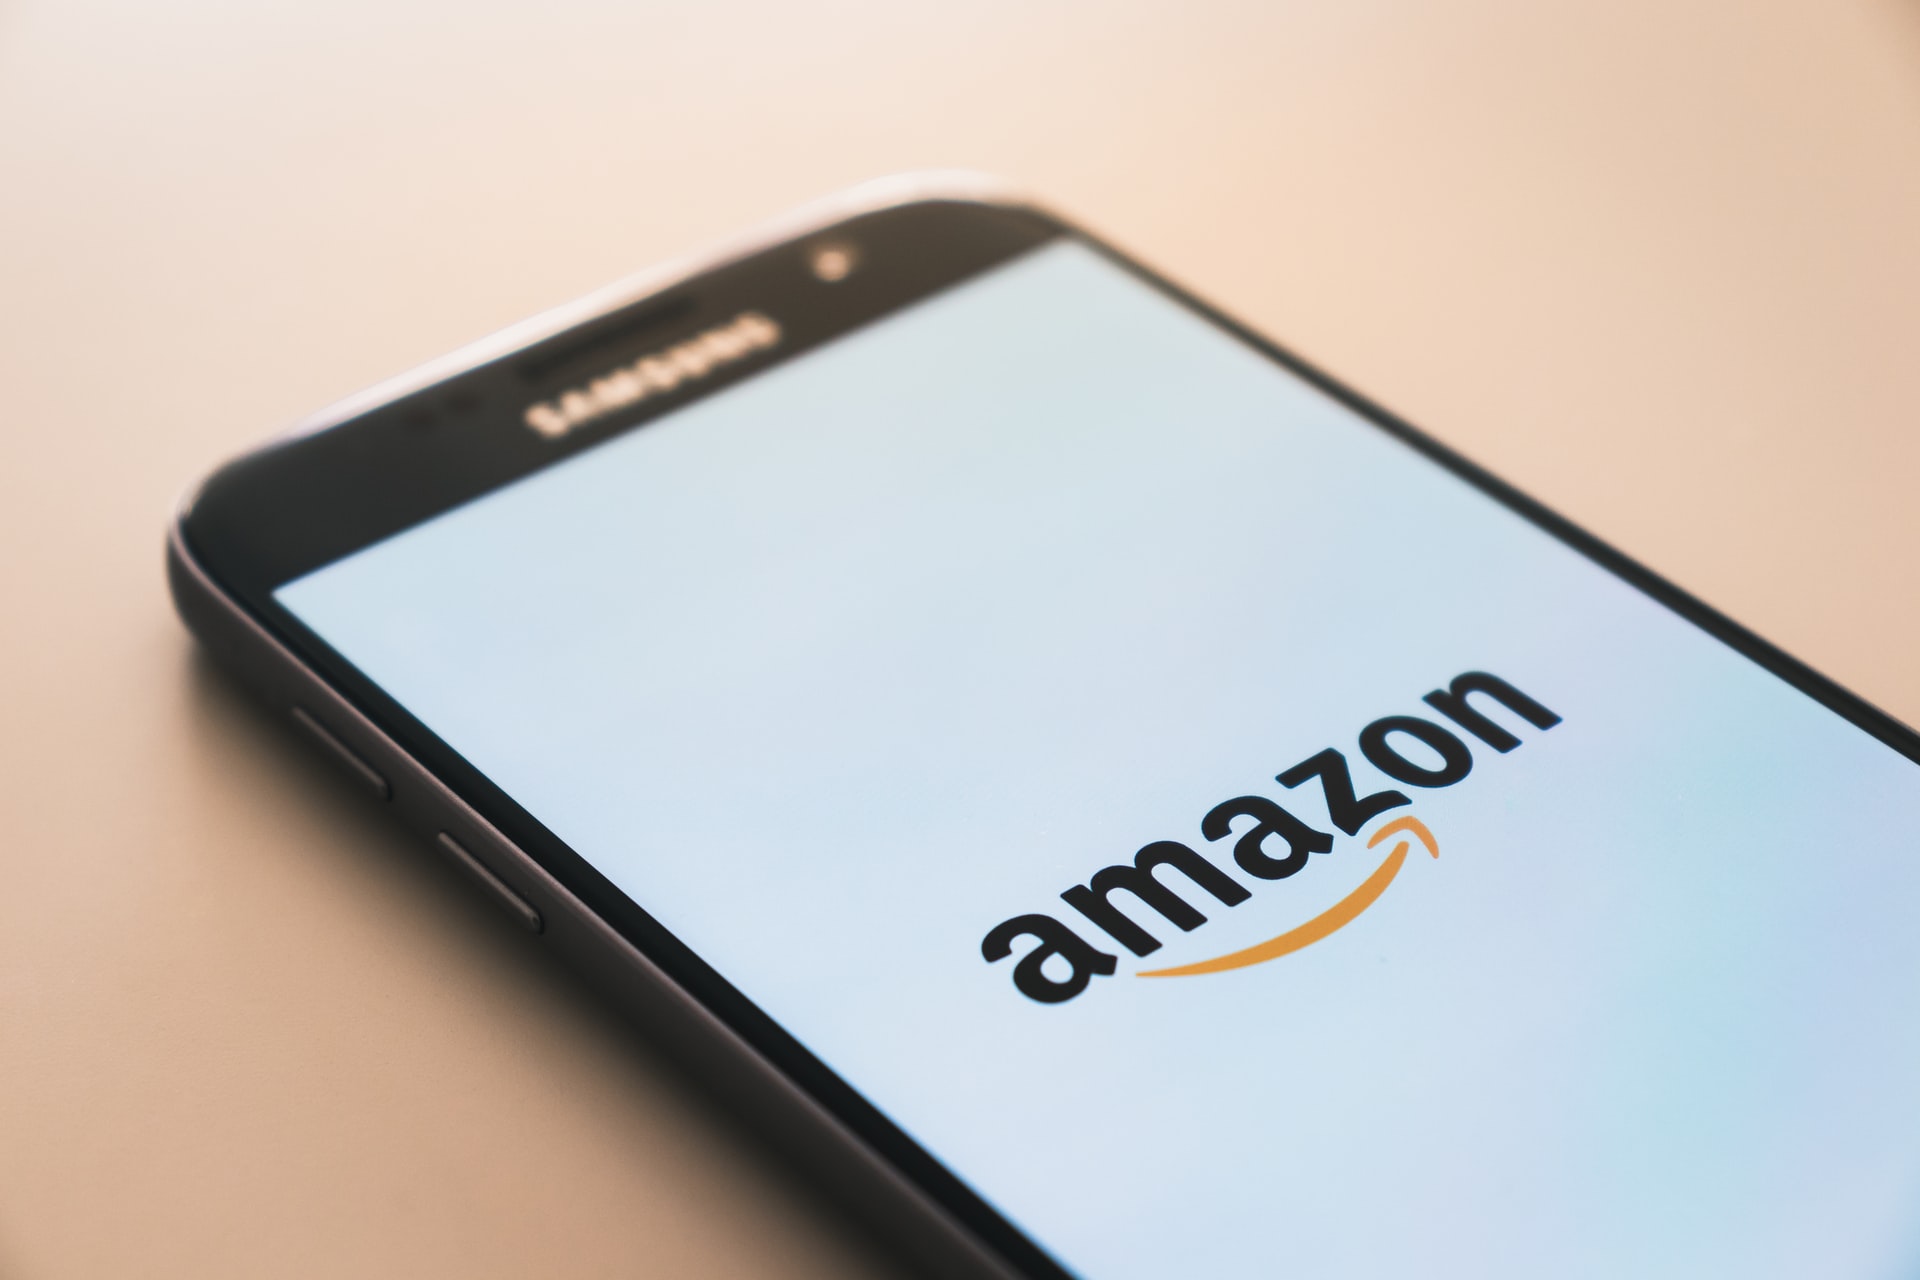 Amazon signed an agreement to buy iRobot